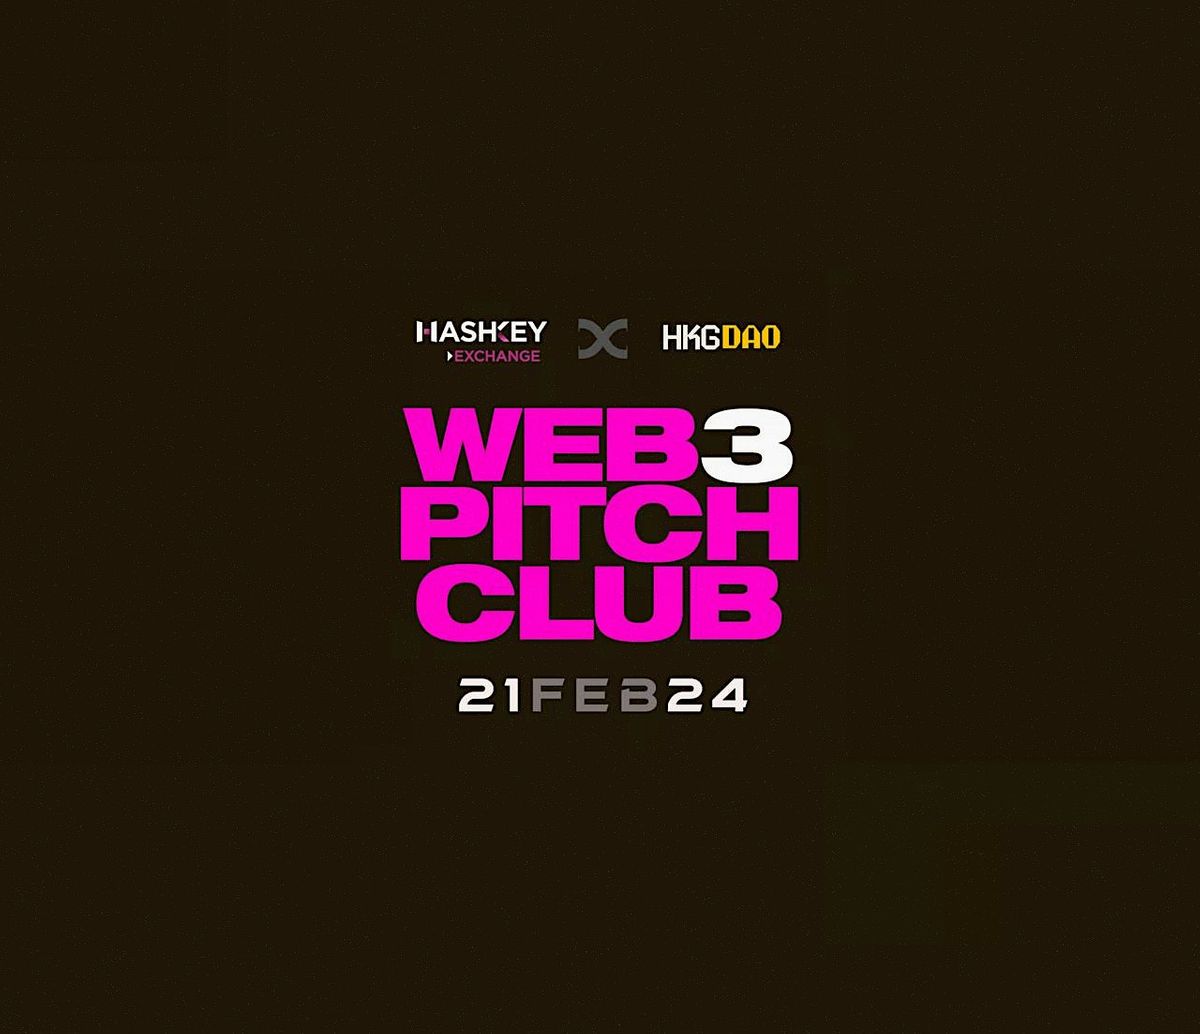 HKGDAO x Hashkey presents: Web3 Pitch Club